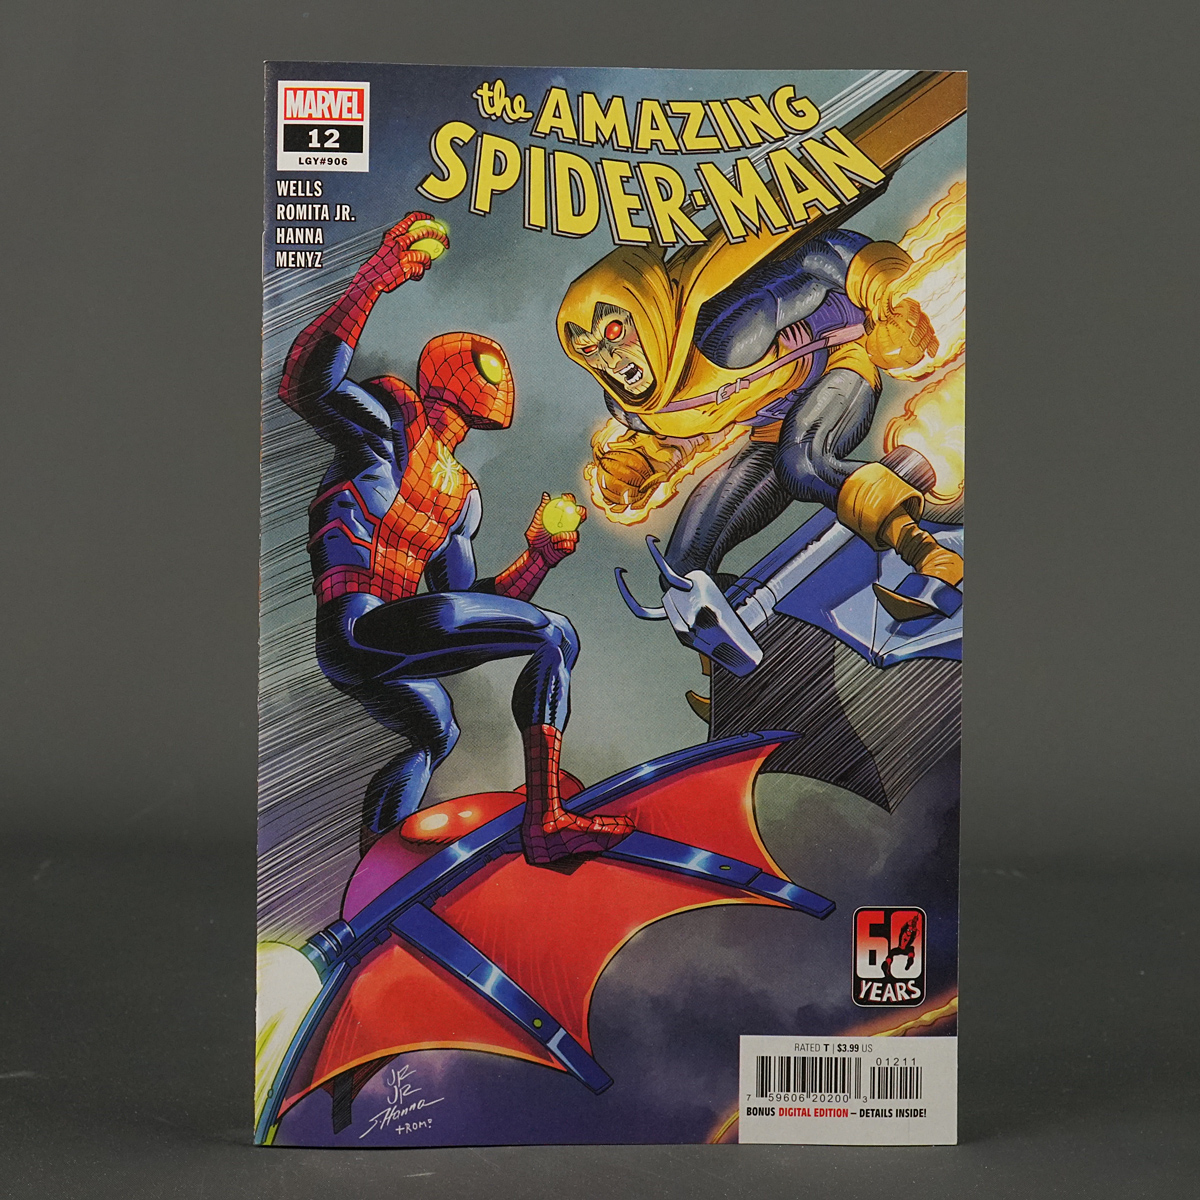 AMAZING SPIDER-MAN #12 Marvel Comics 2022 AUG220833 (W) Wells (A/CA) Romita